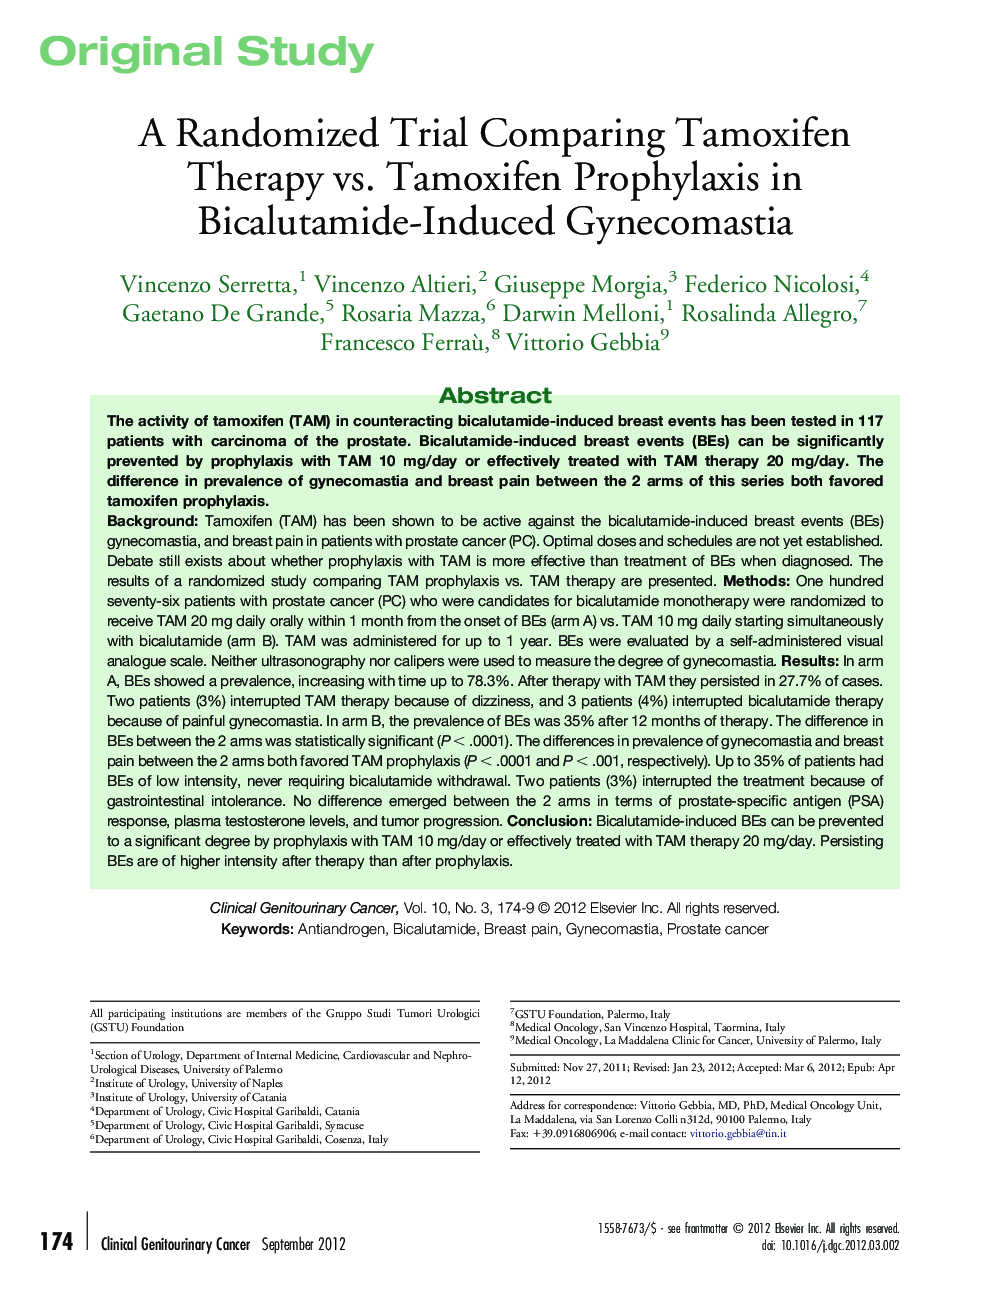 A Randomized Trial Comparing Tamoxifen Therapy vs. Tamoxifen Prophylaxis in Bicalutamide-Induced Gynecomastia 